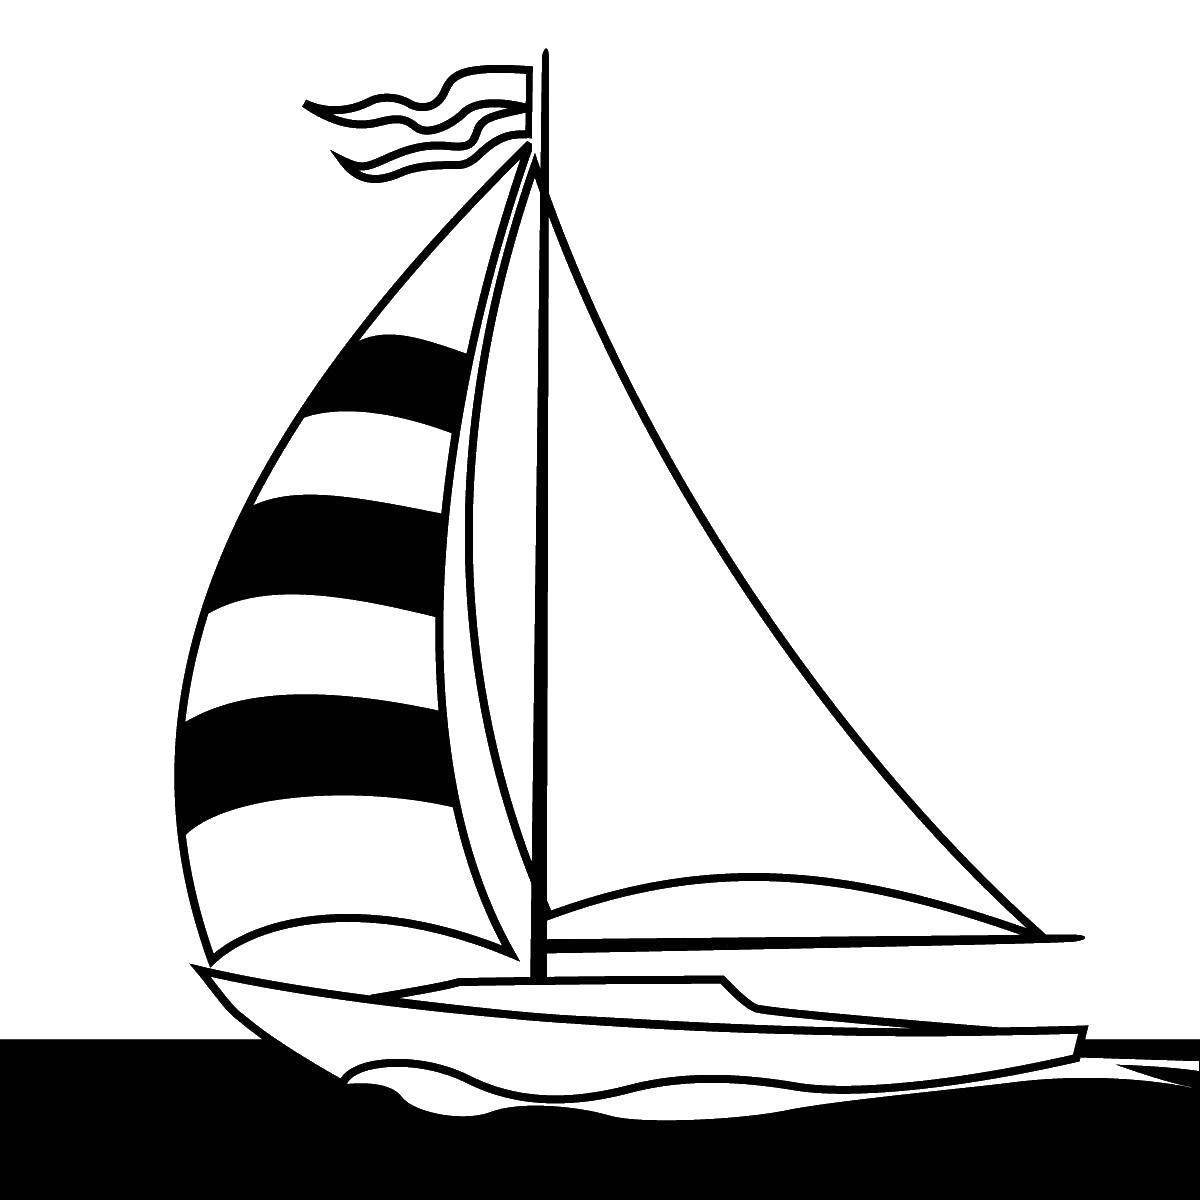 Опис: розмальовки  Смугасте вітрило. Категорія: корабель. Теги:  Корабель, вода.